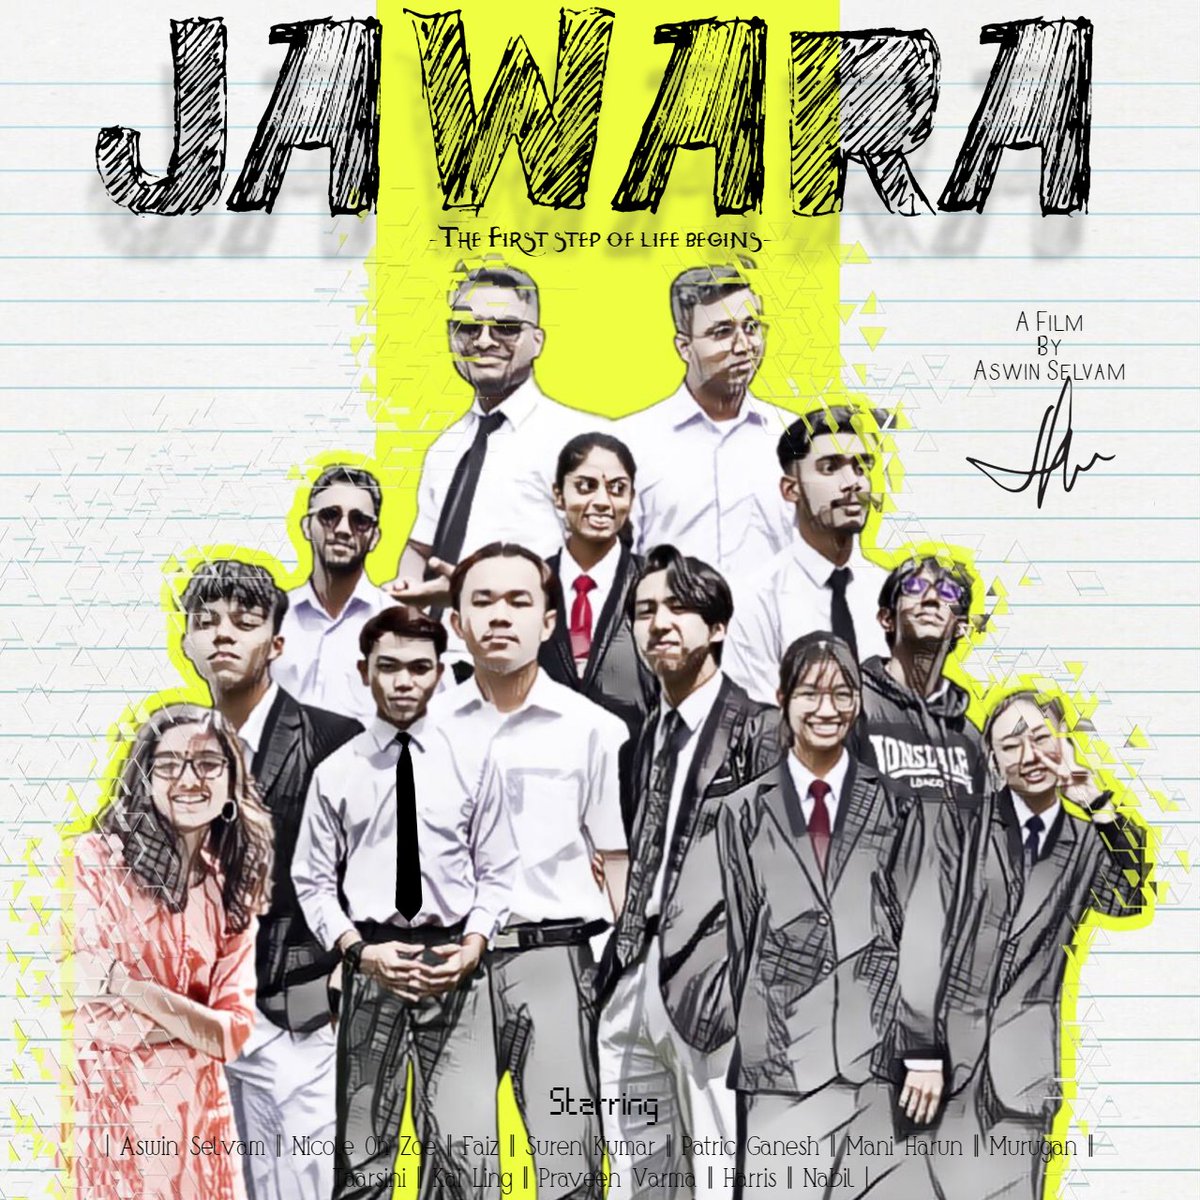 #JAWARA
.
.
.
Stay tune💯
IG: bachelor_productions_